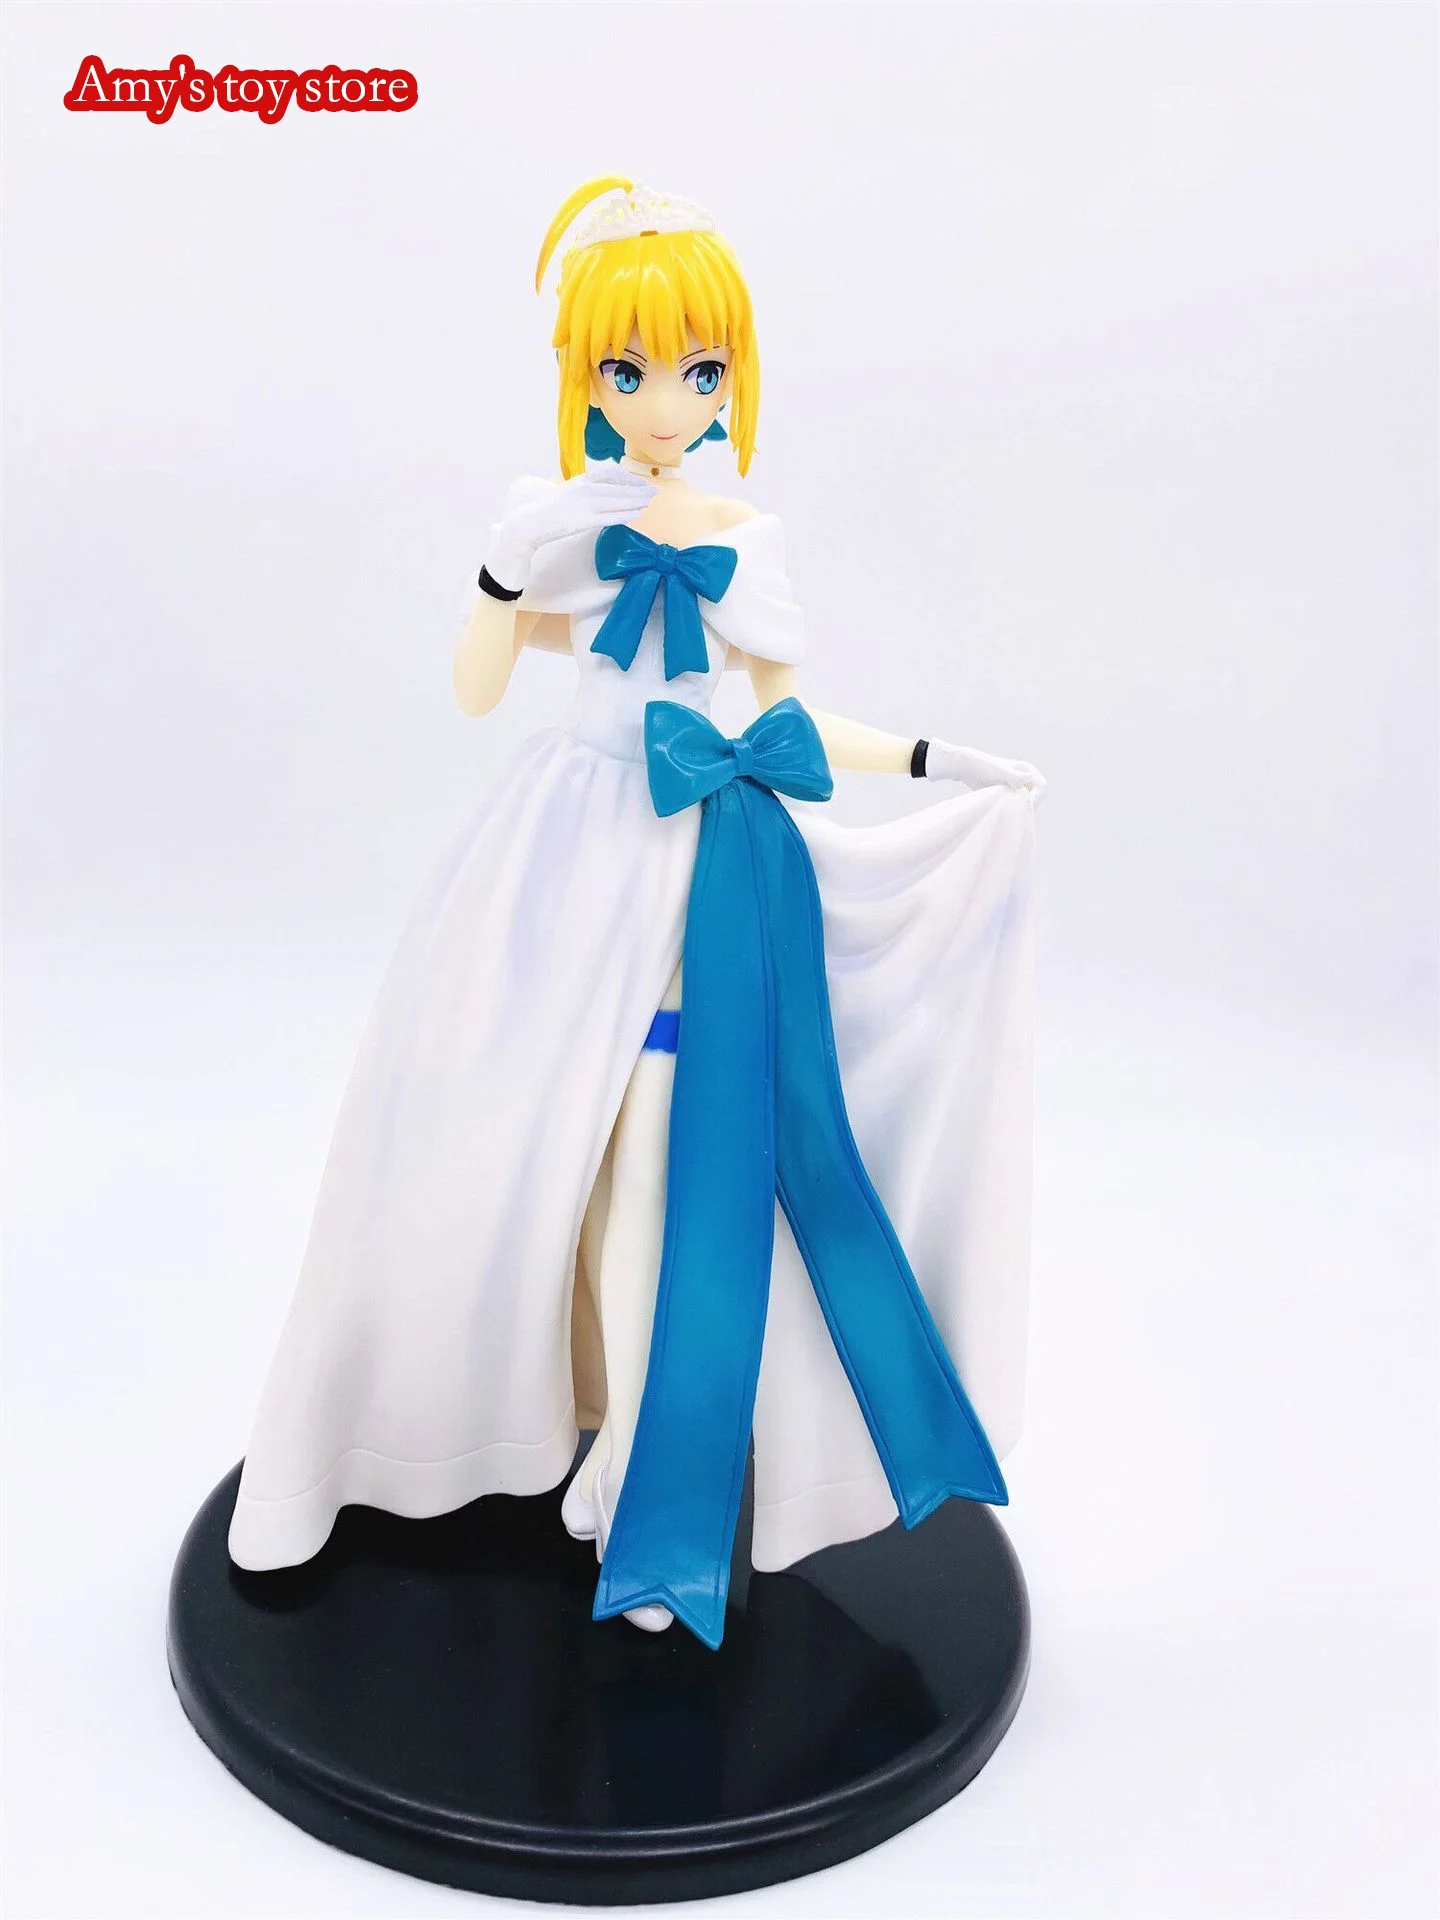 

24cm Fate/Grand Order Anime Figure Saber Action Figure Saber Heroic Spirit Formal Dress Ver Altria Pendragon Figurine Model Doll